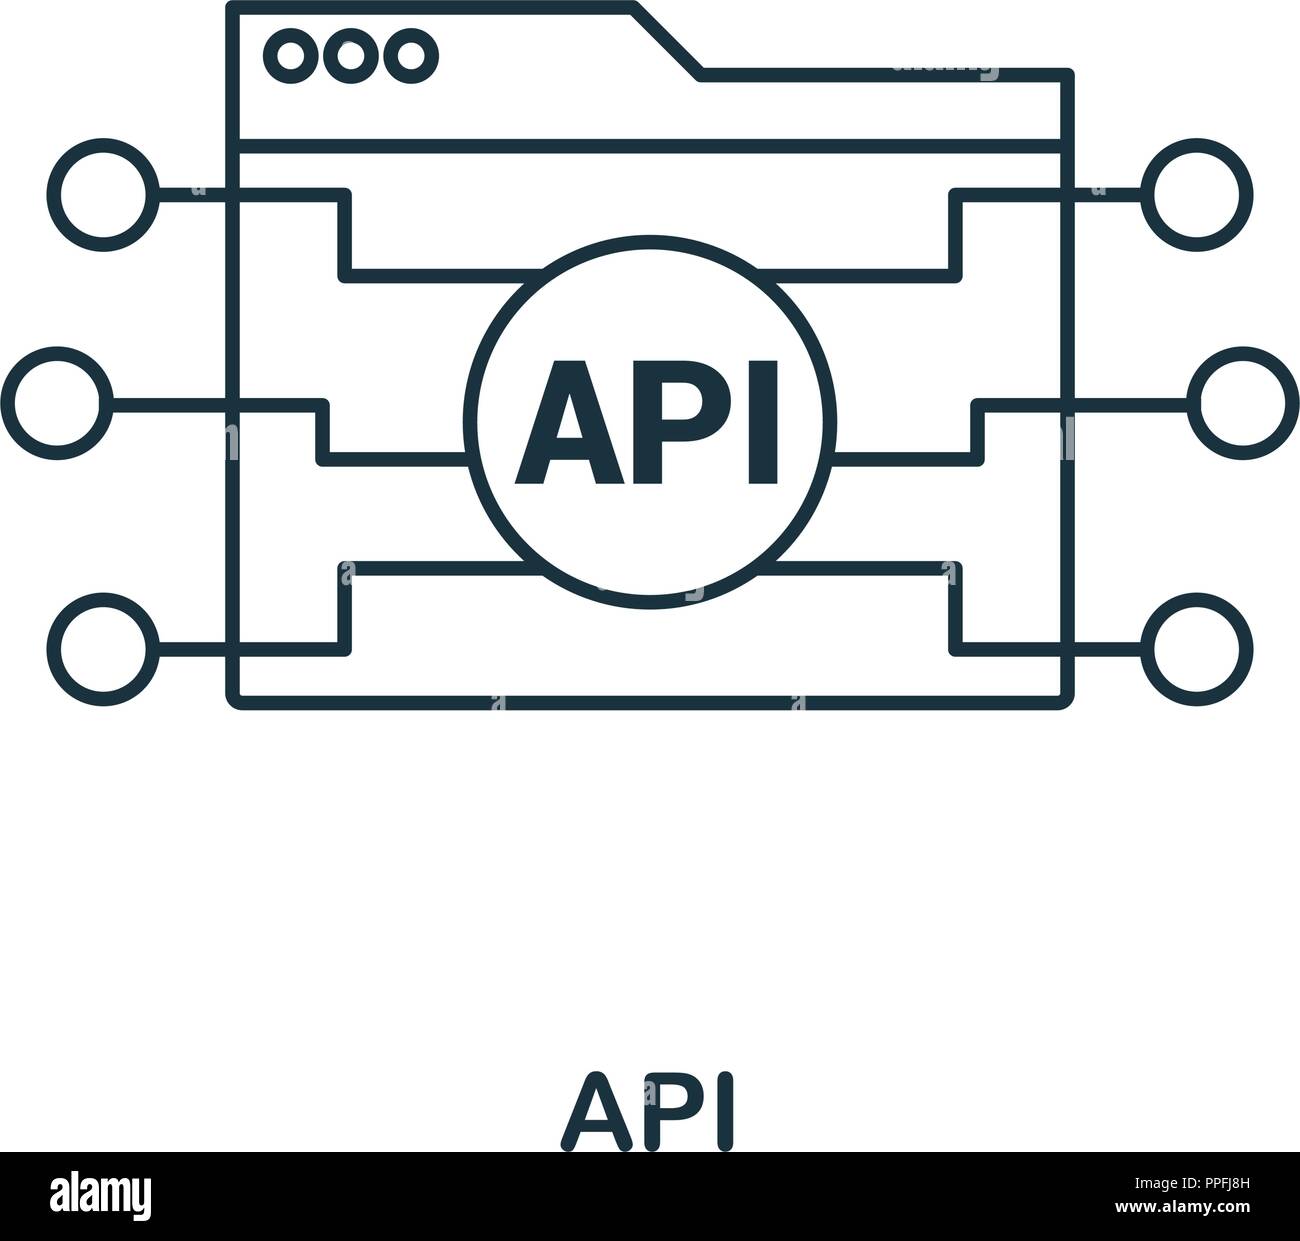 Api Outline Icon Premium Design From Web Development Collection